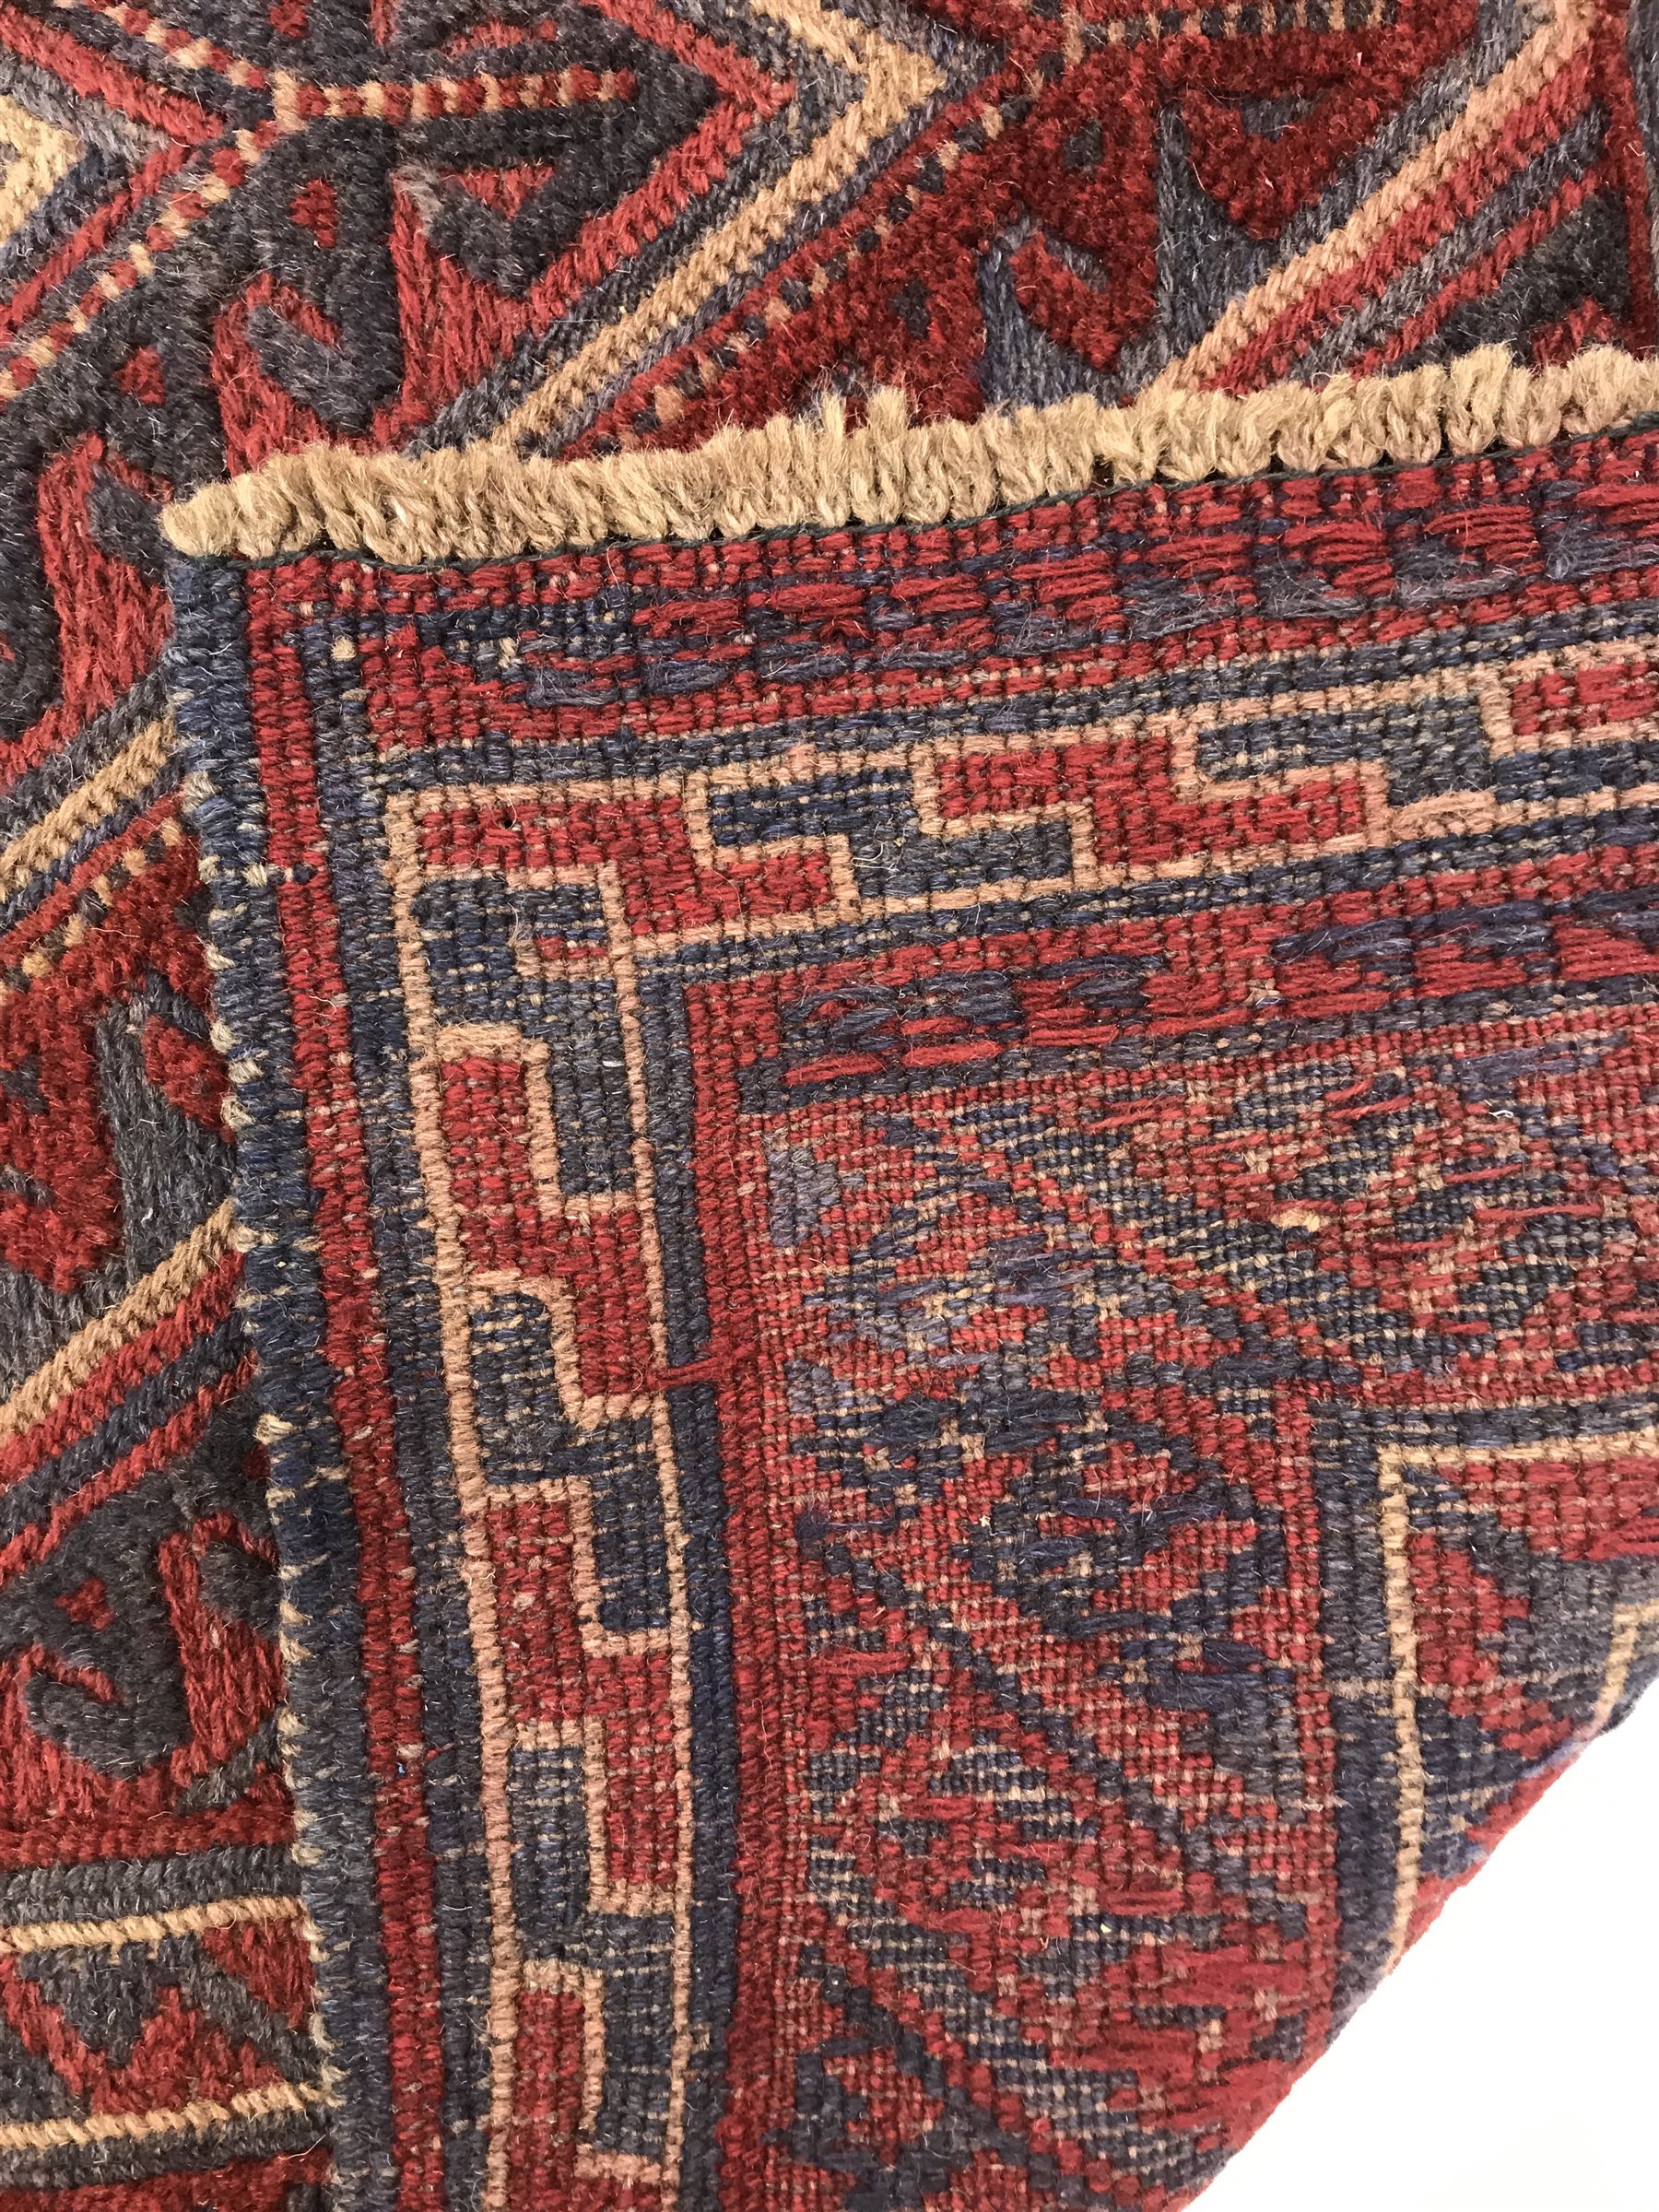 Gazak red and blue ground rug, central medallion, 120cm x 114cm - Image 4 of 6